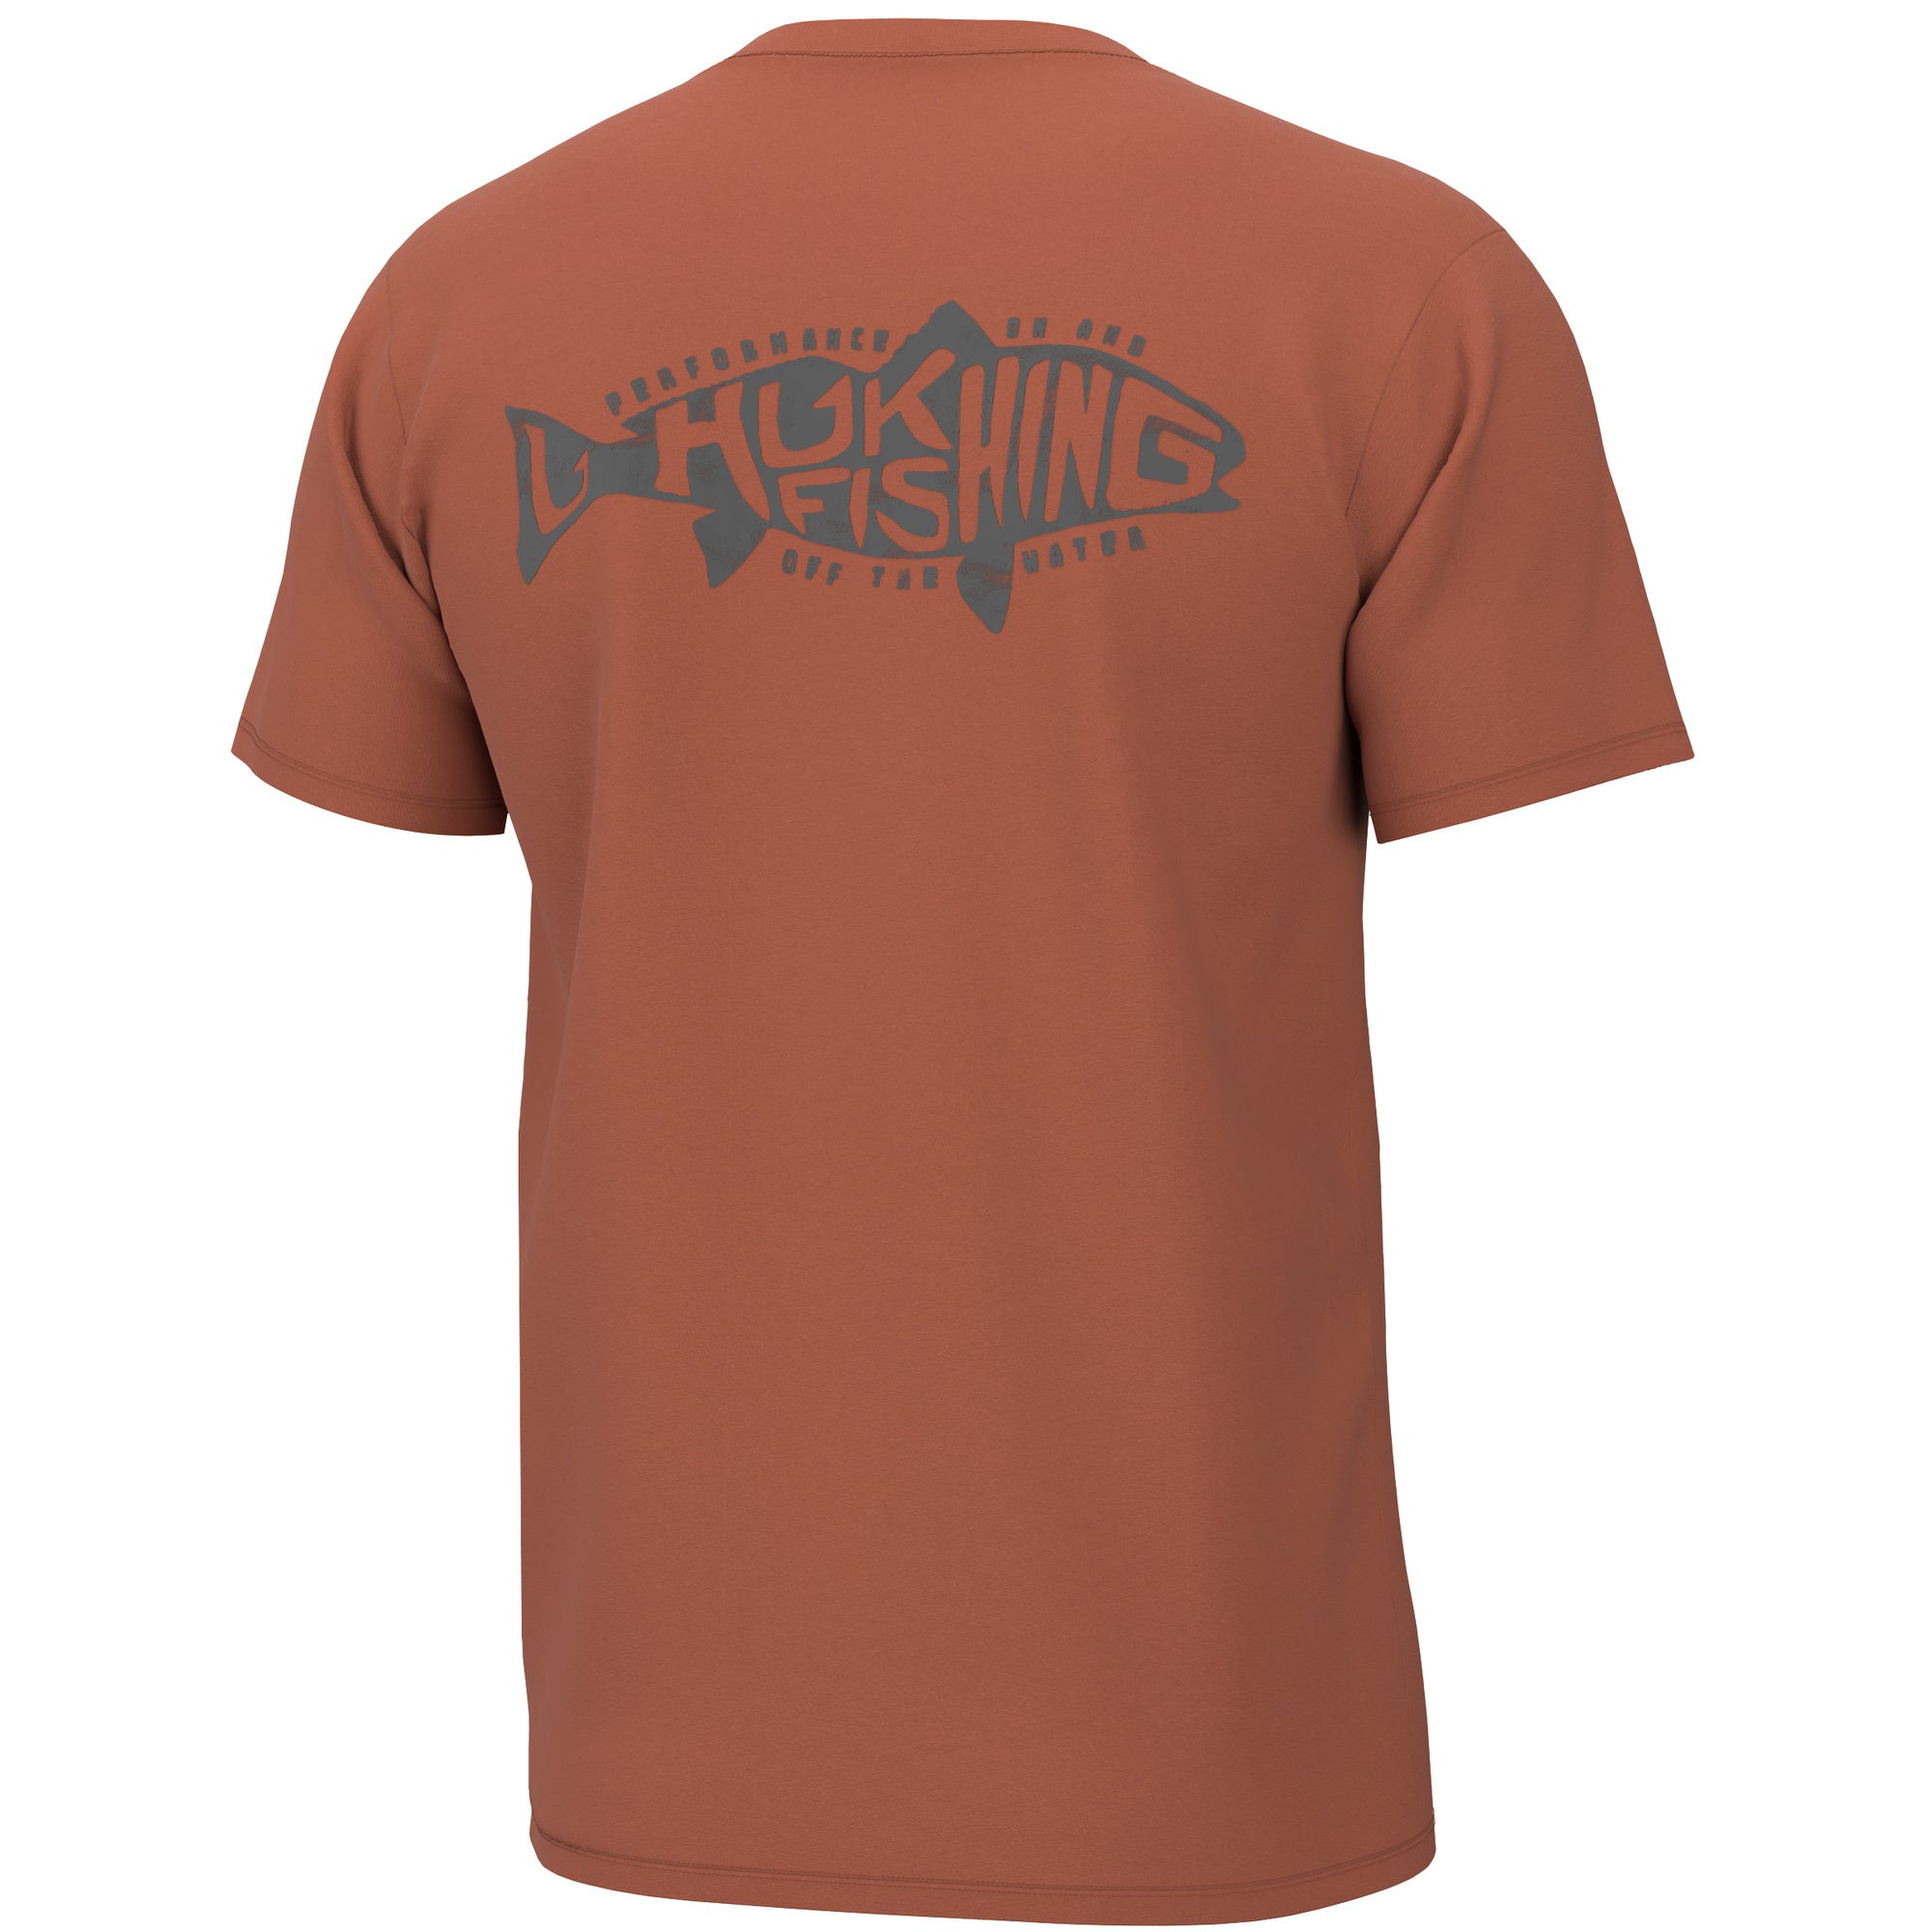 Huk Fishing Shirts For Men New Men's 3D Gradient Printed T-shirt Hooded  Short Sleeve Top/shirt Blouses Cotton tshirts for Men Teacher  Shirts,Orange,S 